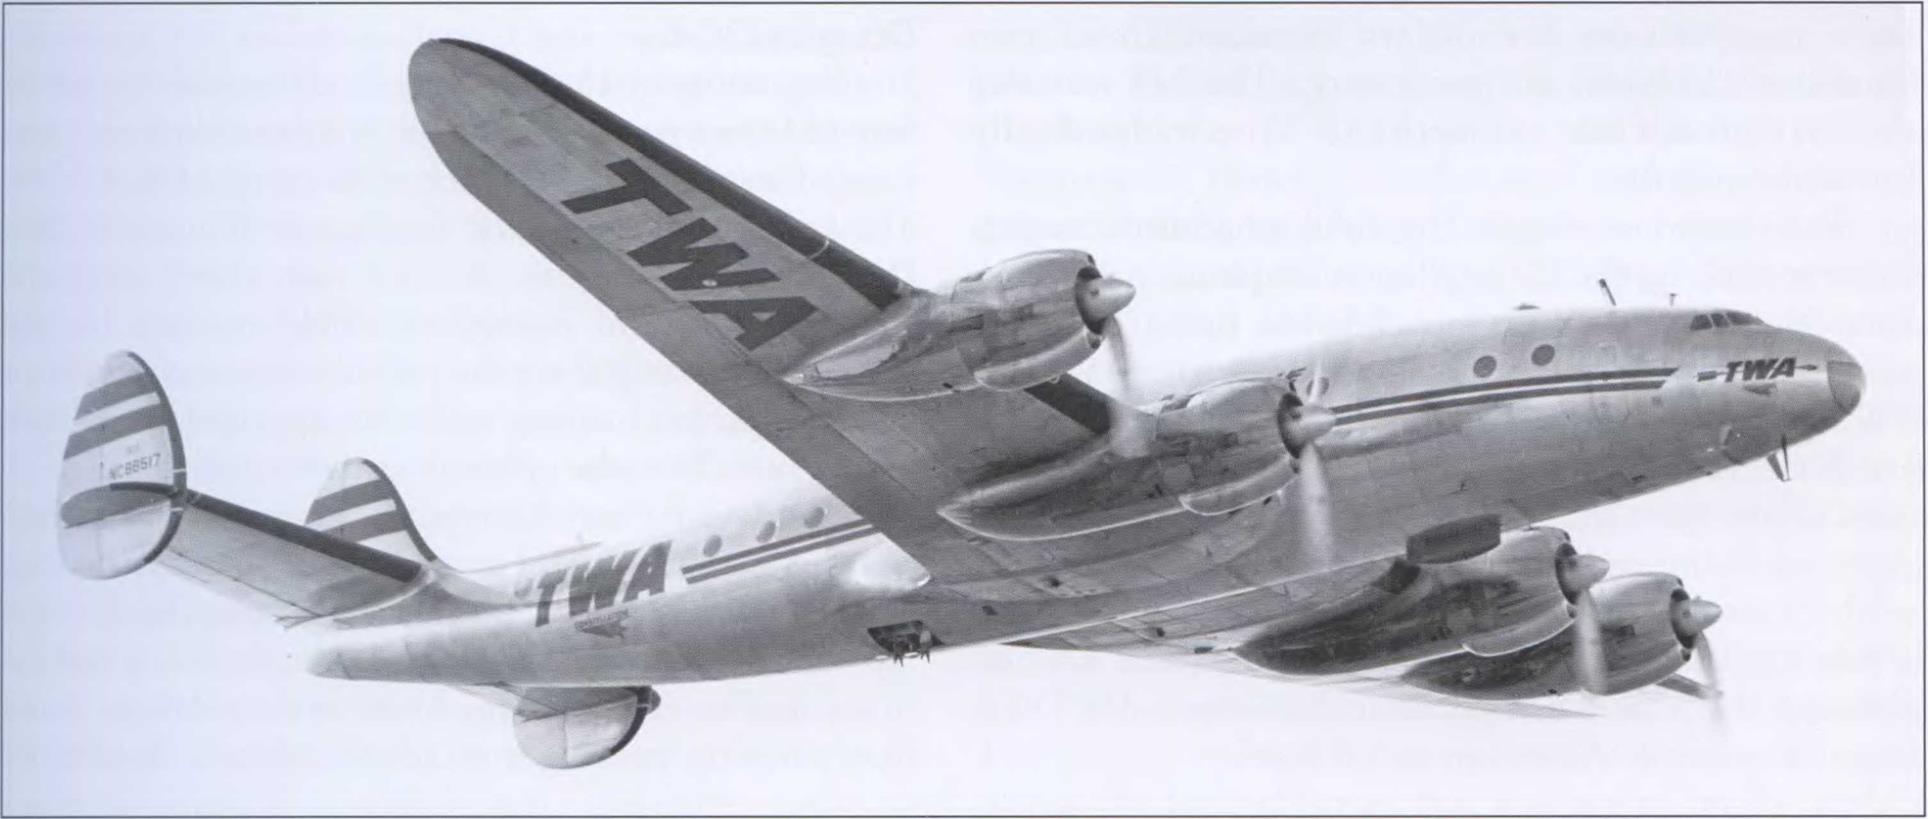 Aircraft of the Era